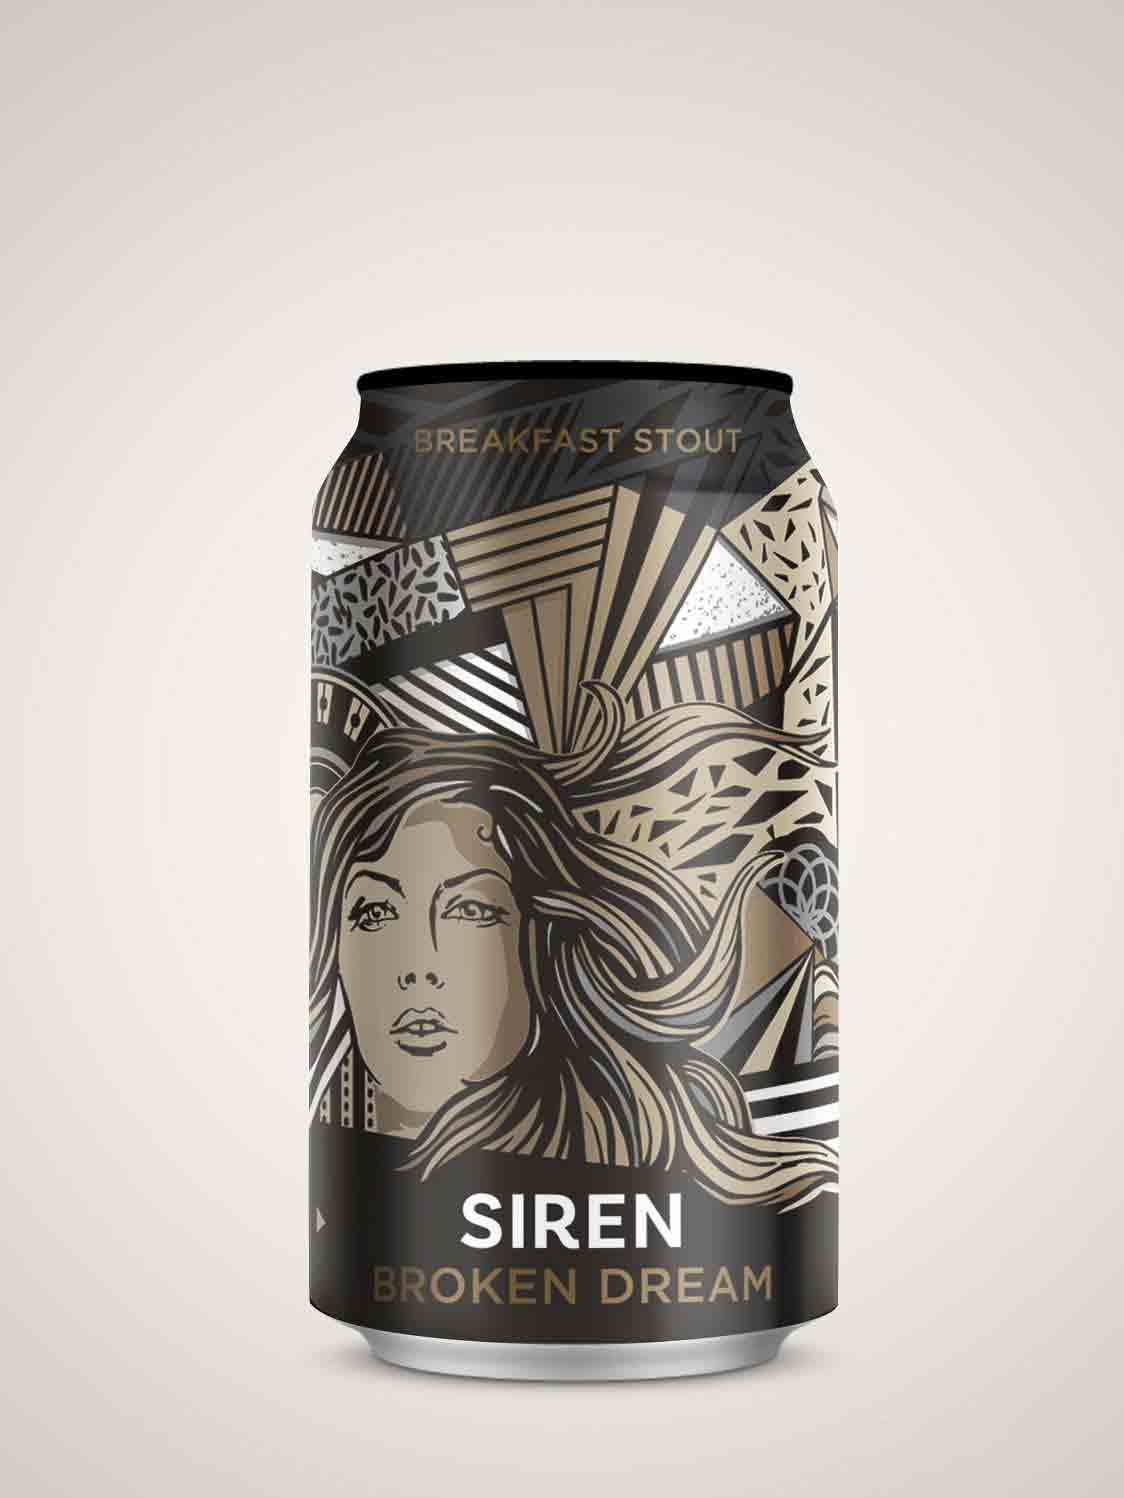 Siren - Broken Dream Breakfast Stout 6.5%